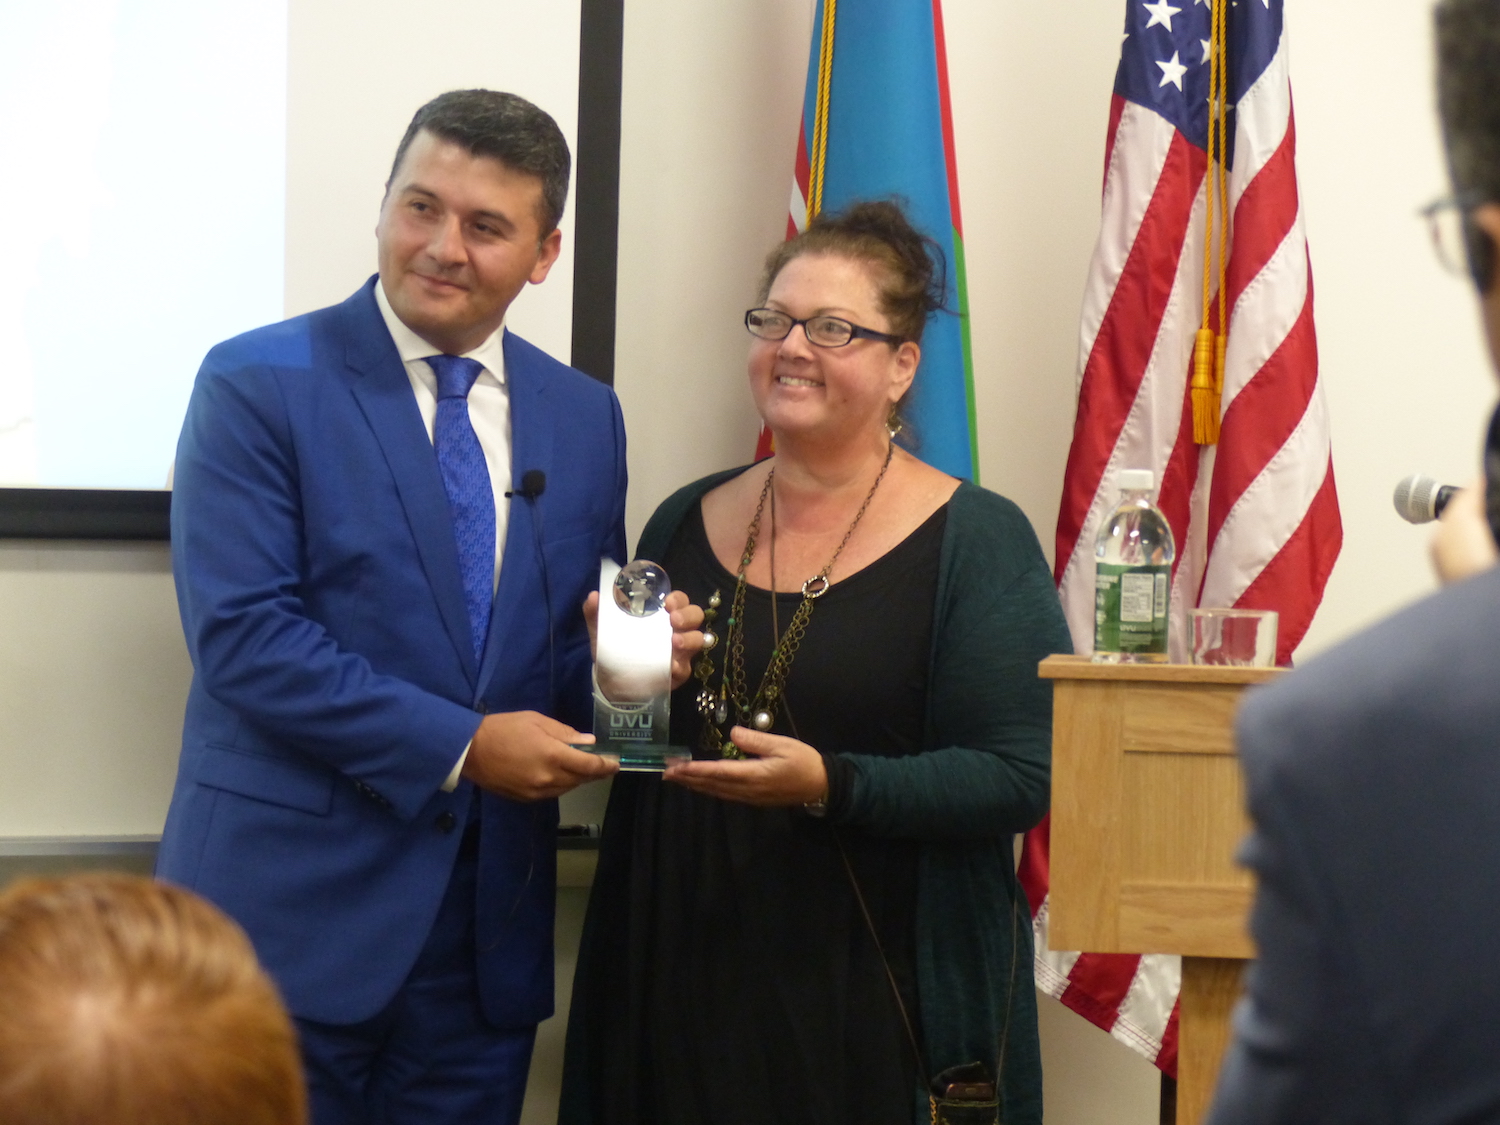 Mr. Nasimi Aghayev receiving an award